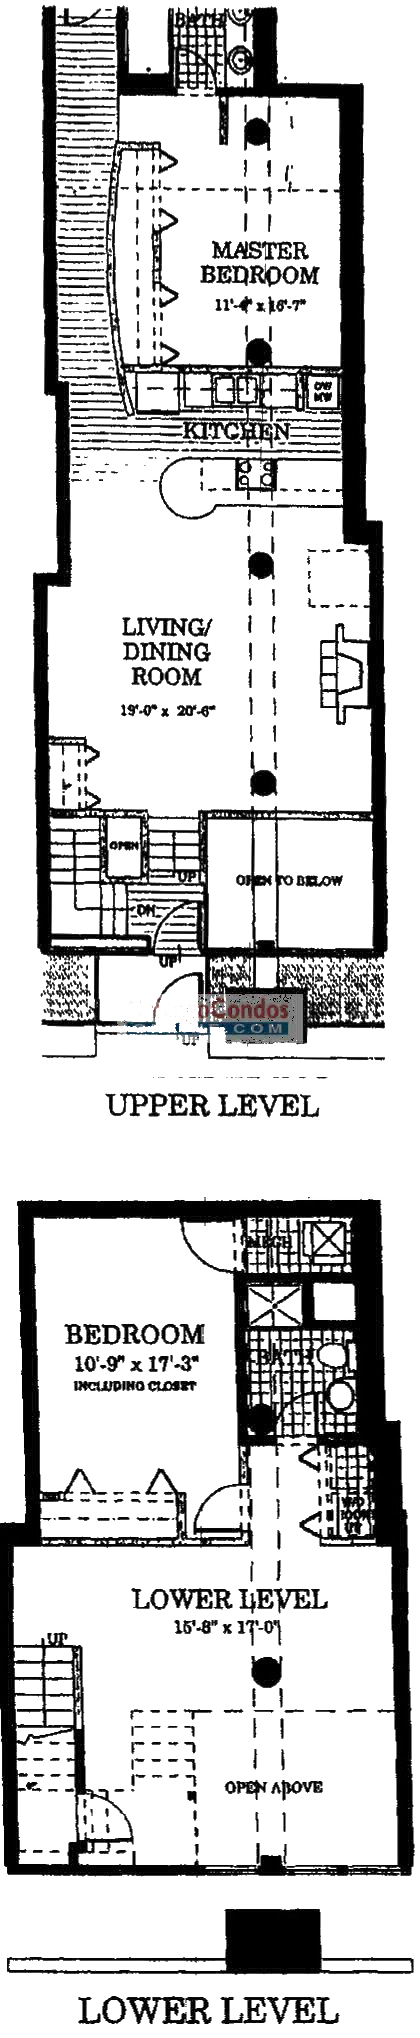 728 W Jackson Floorplan - 103 Duplex Tier*